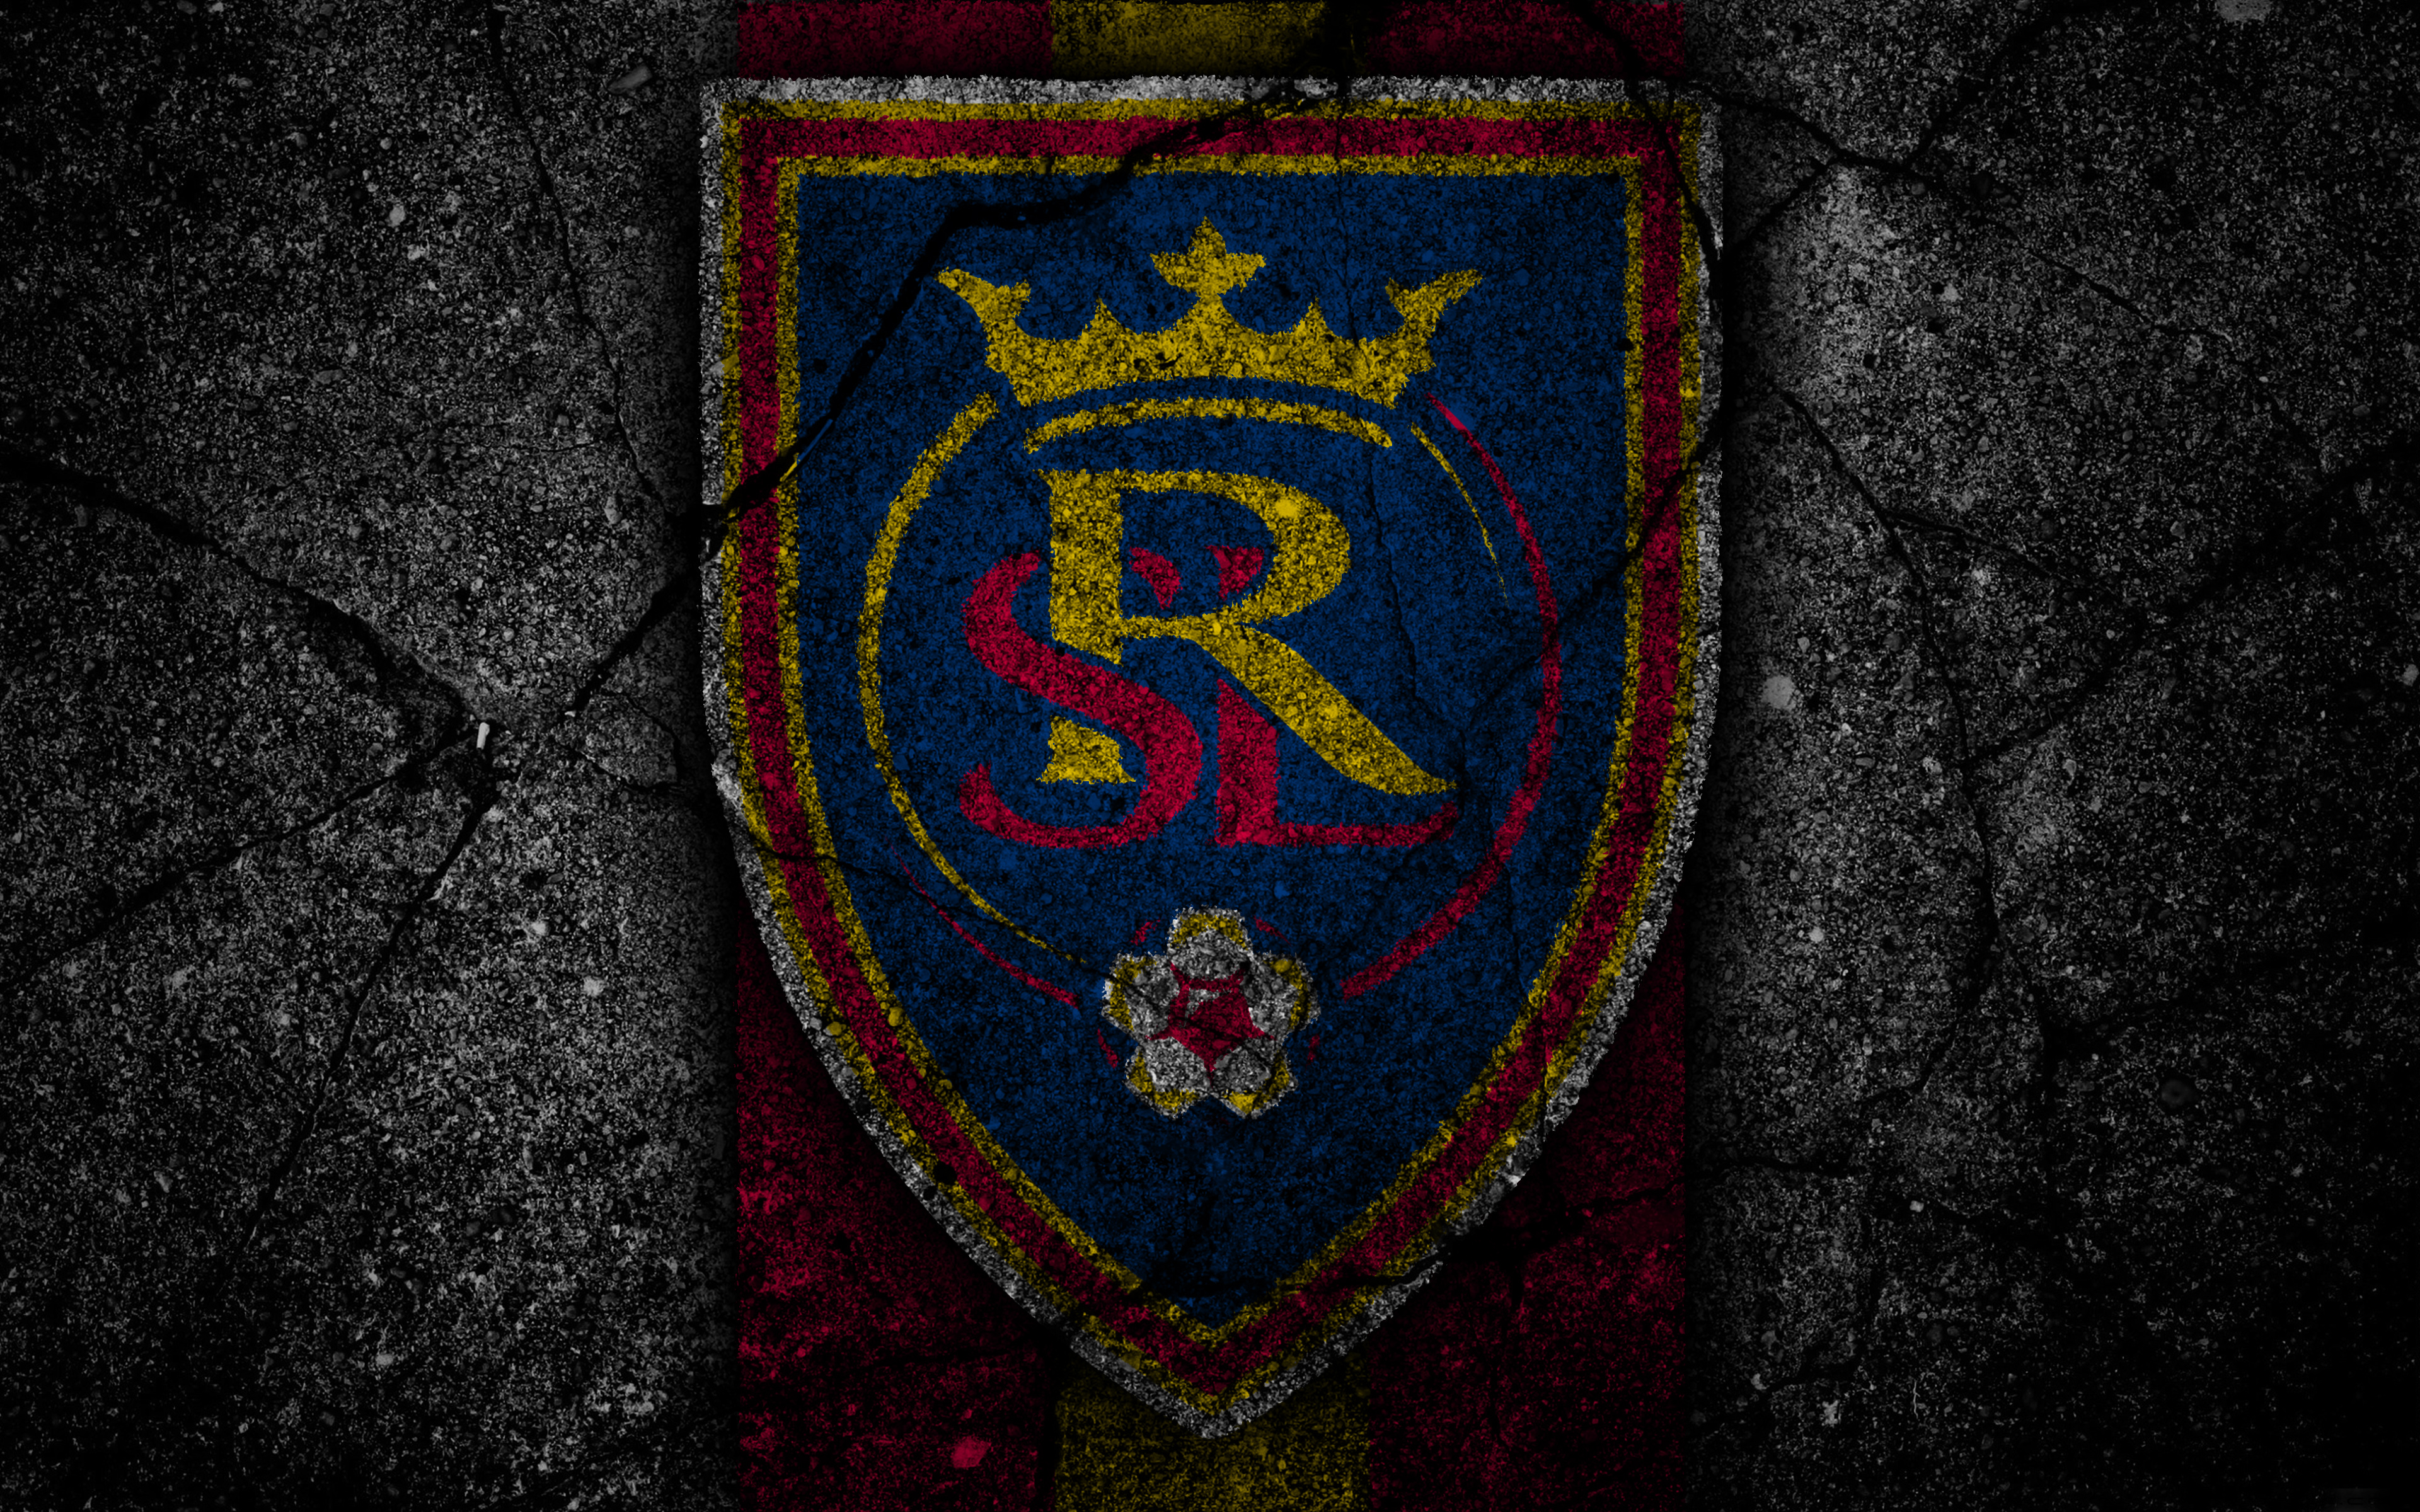 Emblem Logo Mls Real Salt Lake Soccer 3840x2400